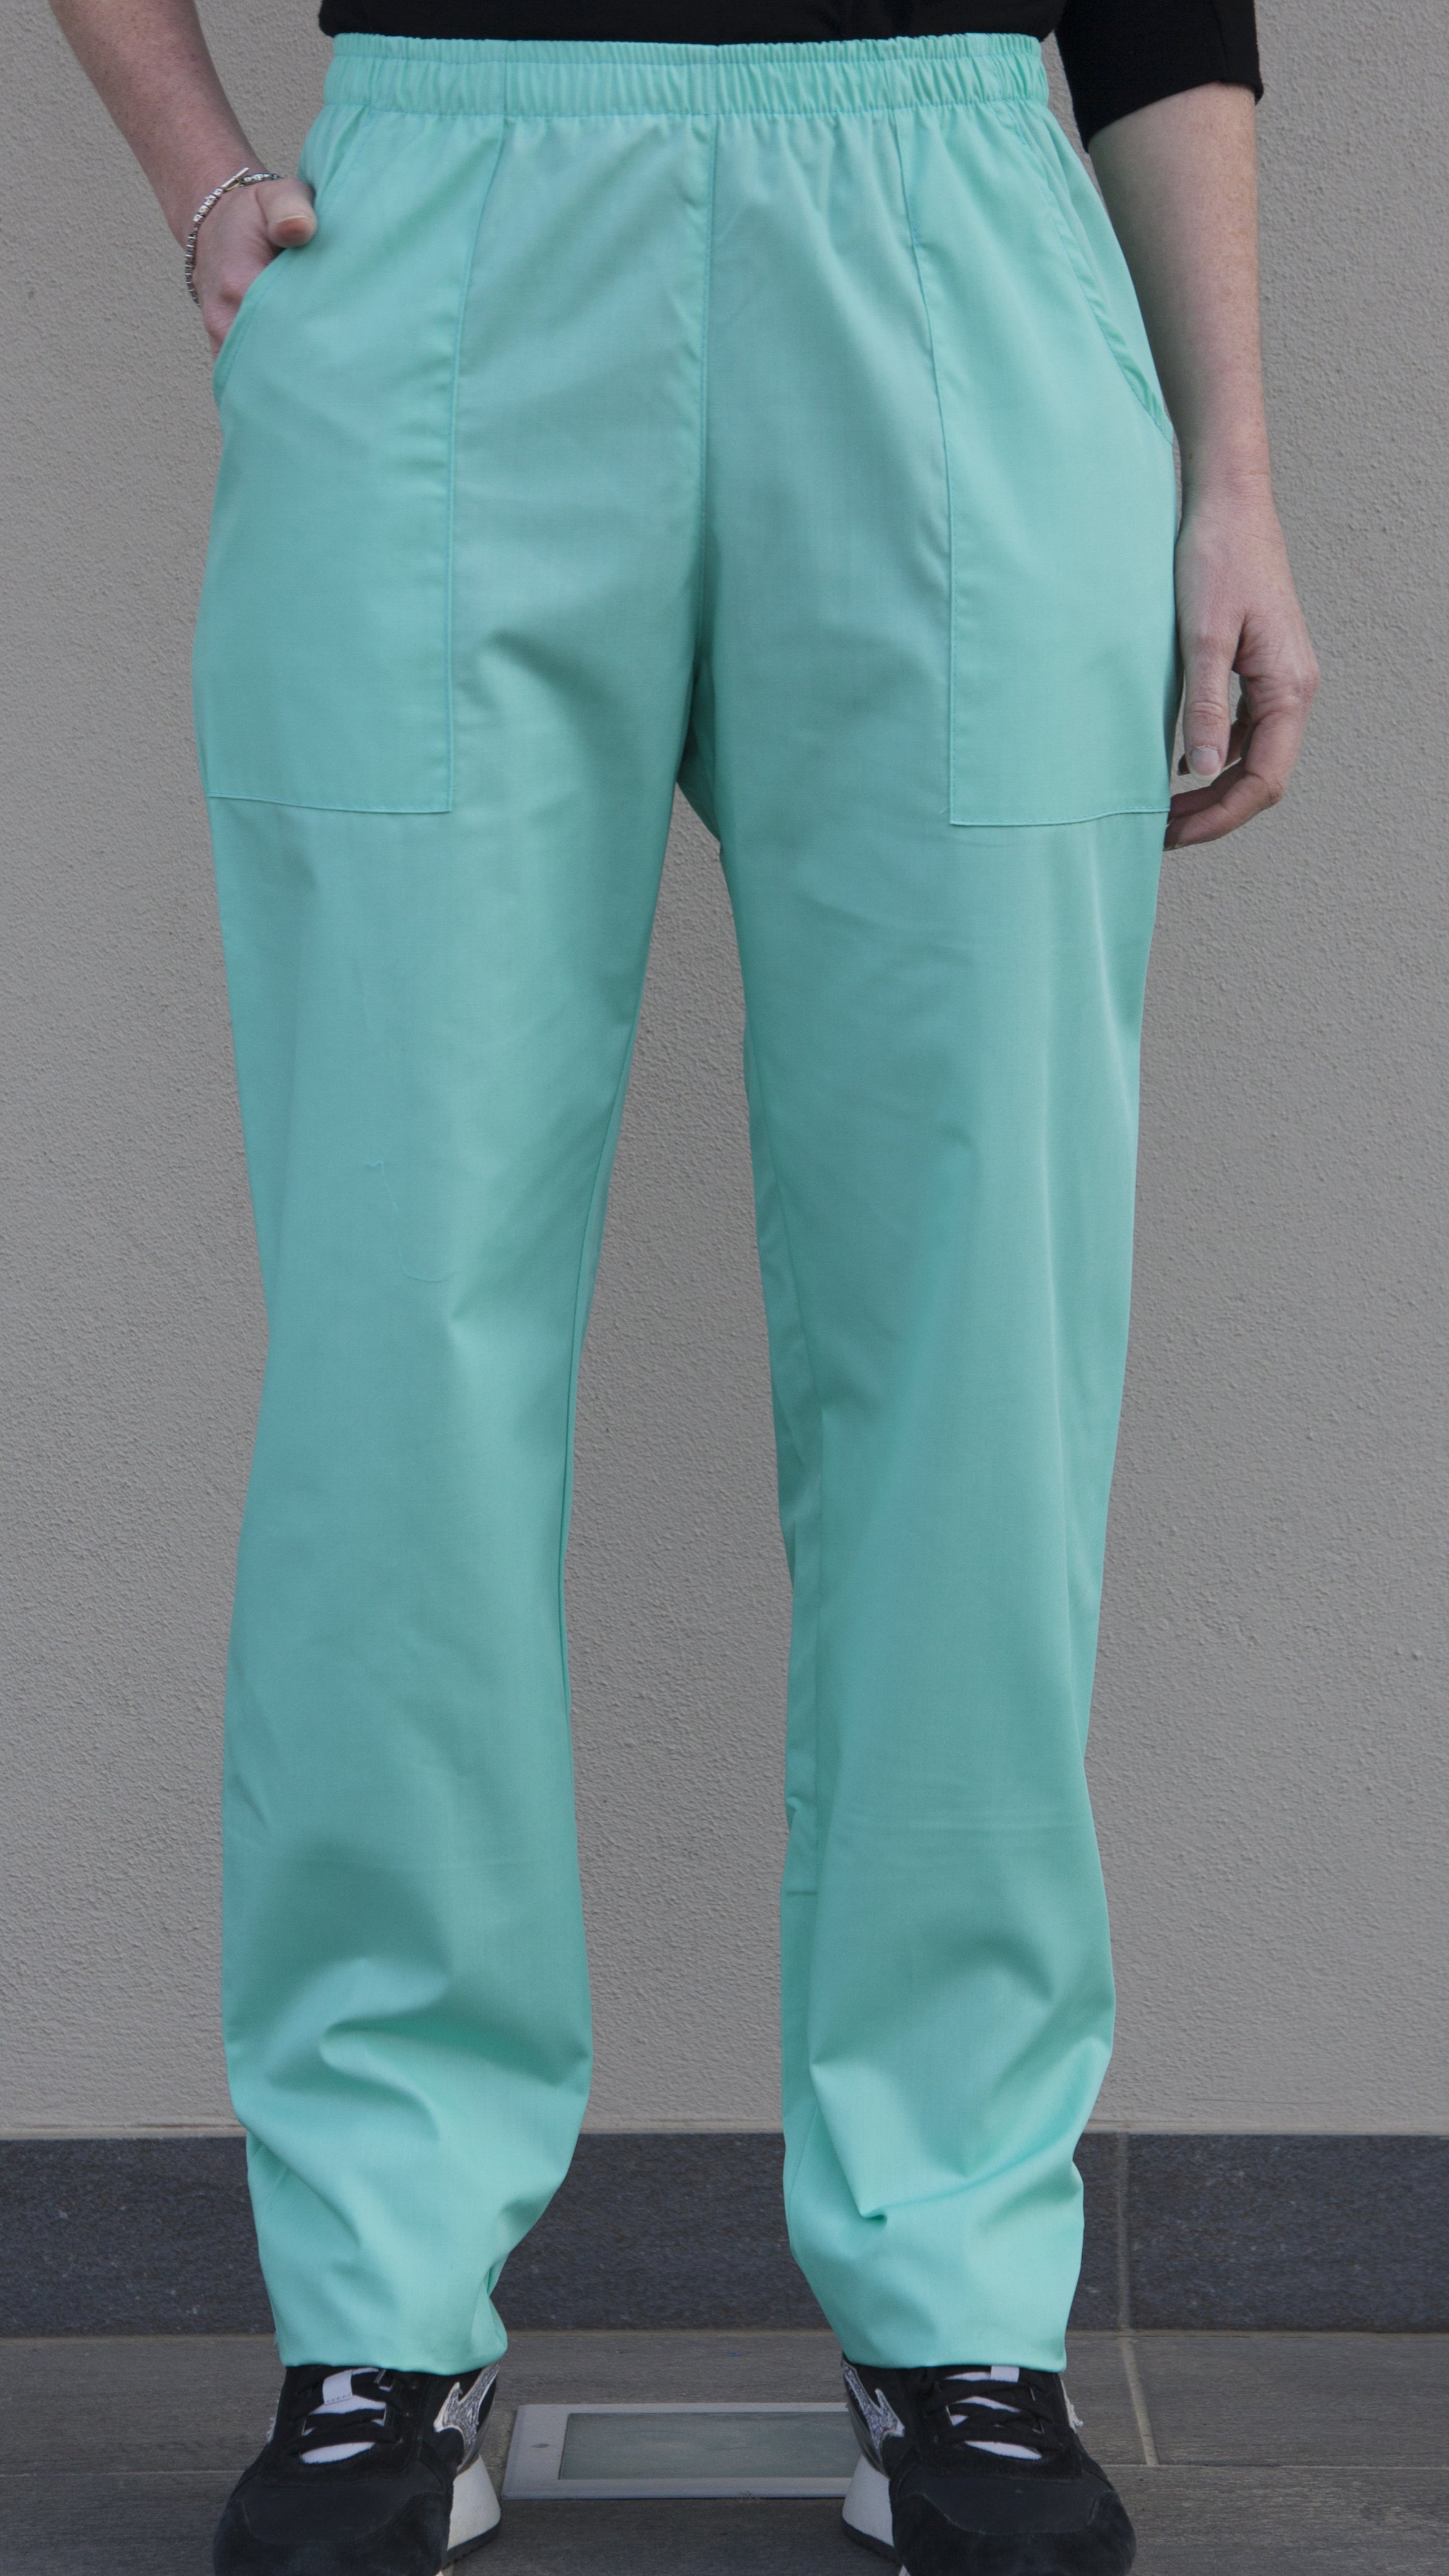 Pantaloni sanitari unisex in tessuto leggero (colori Bianco, Verde Acqua e Blu Lavanda)